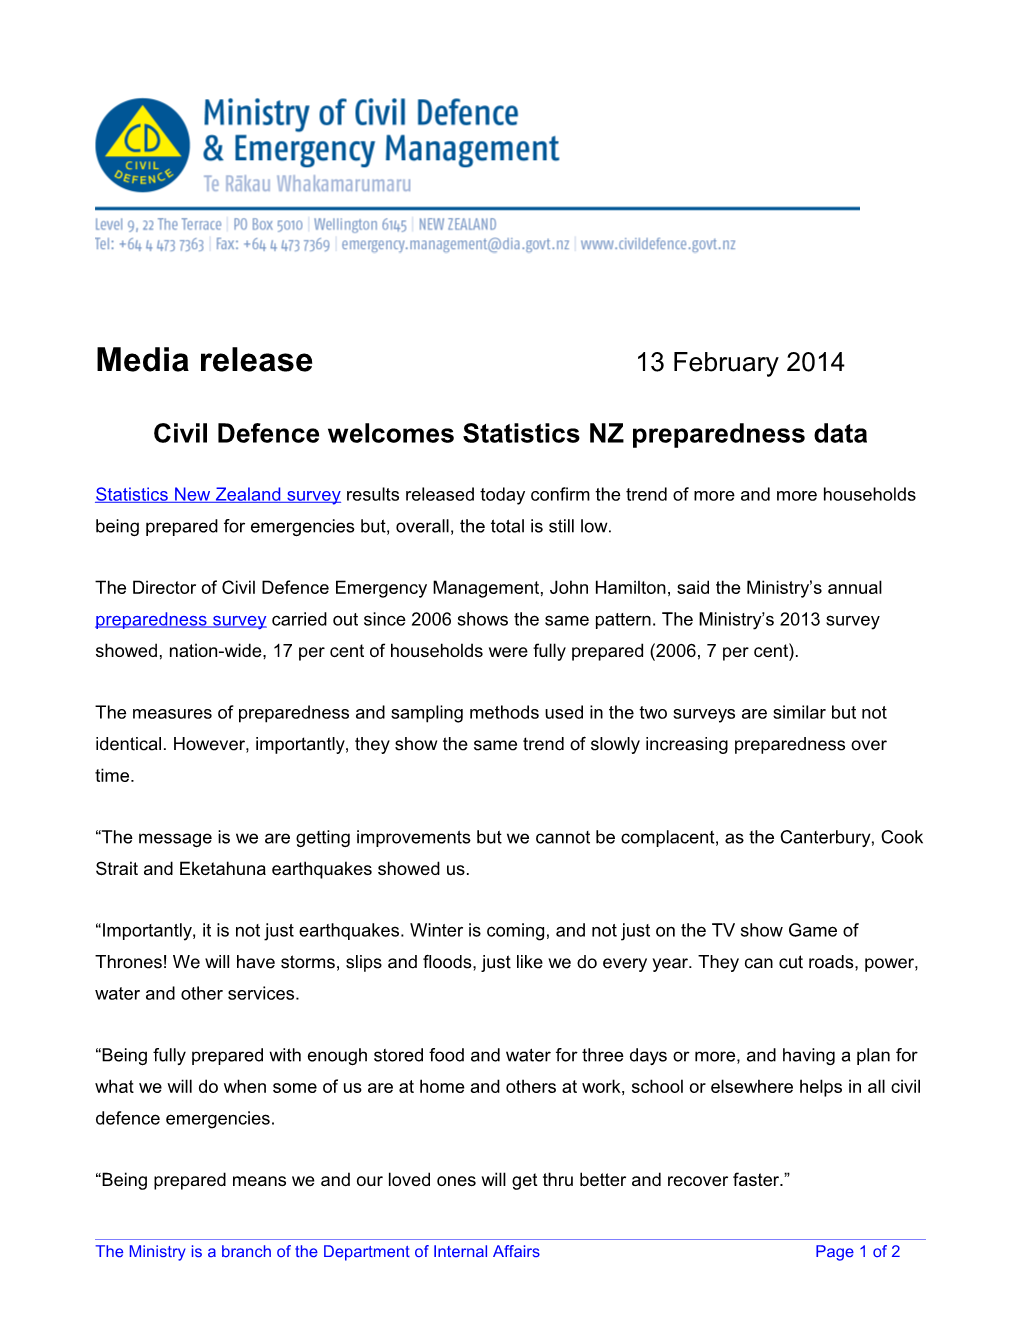 Civil Defence Welcomes Statistics NZ Preparedness Data